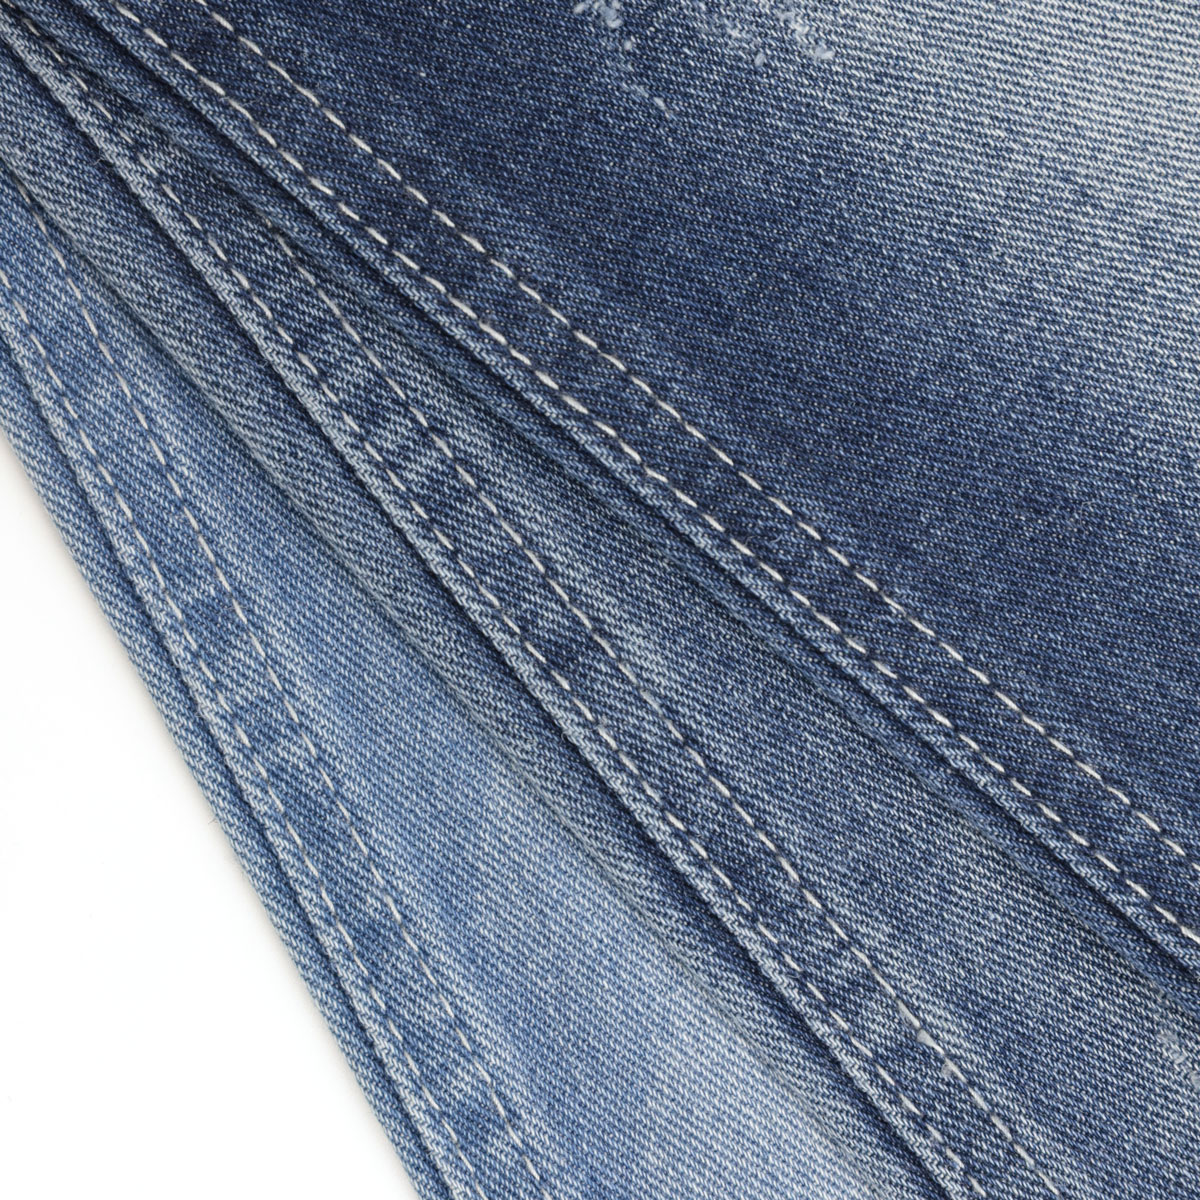 Qualitative Analysis of Premium Denim Jeans Market with Innovations, New Business Developments, Comp 1